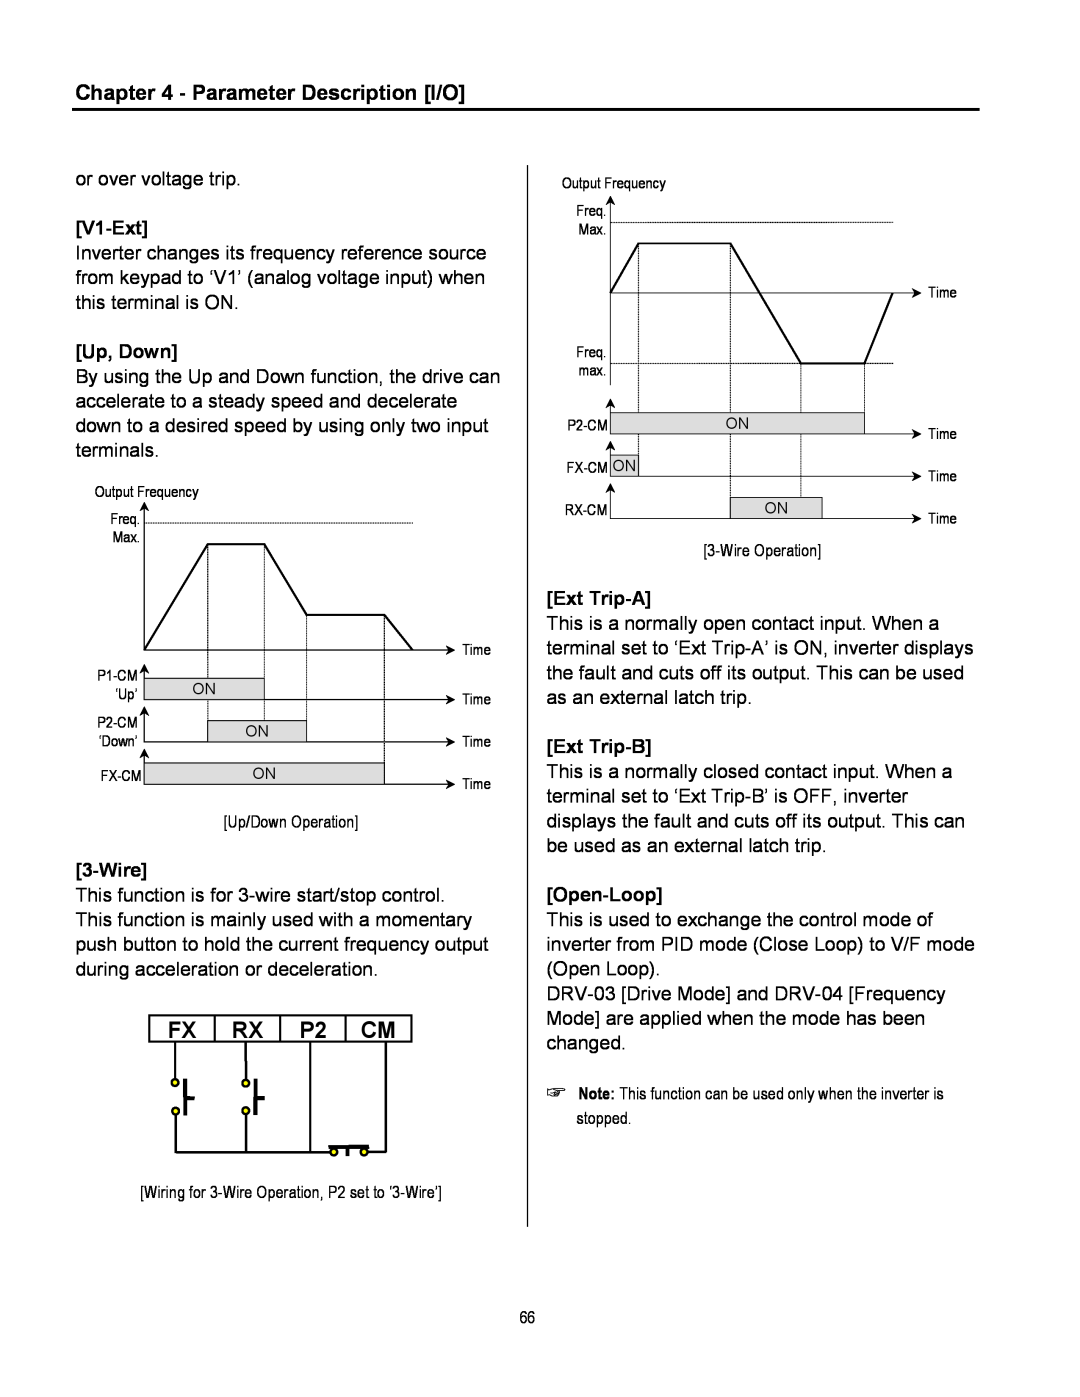 Cleveland Range inverter FX RX P2 CM, Parameter Description I/O, V1-Ext, Up, Down, Wire, Ext Trip-A, Ext Trip-B, Open-Loop 